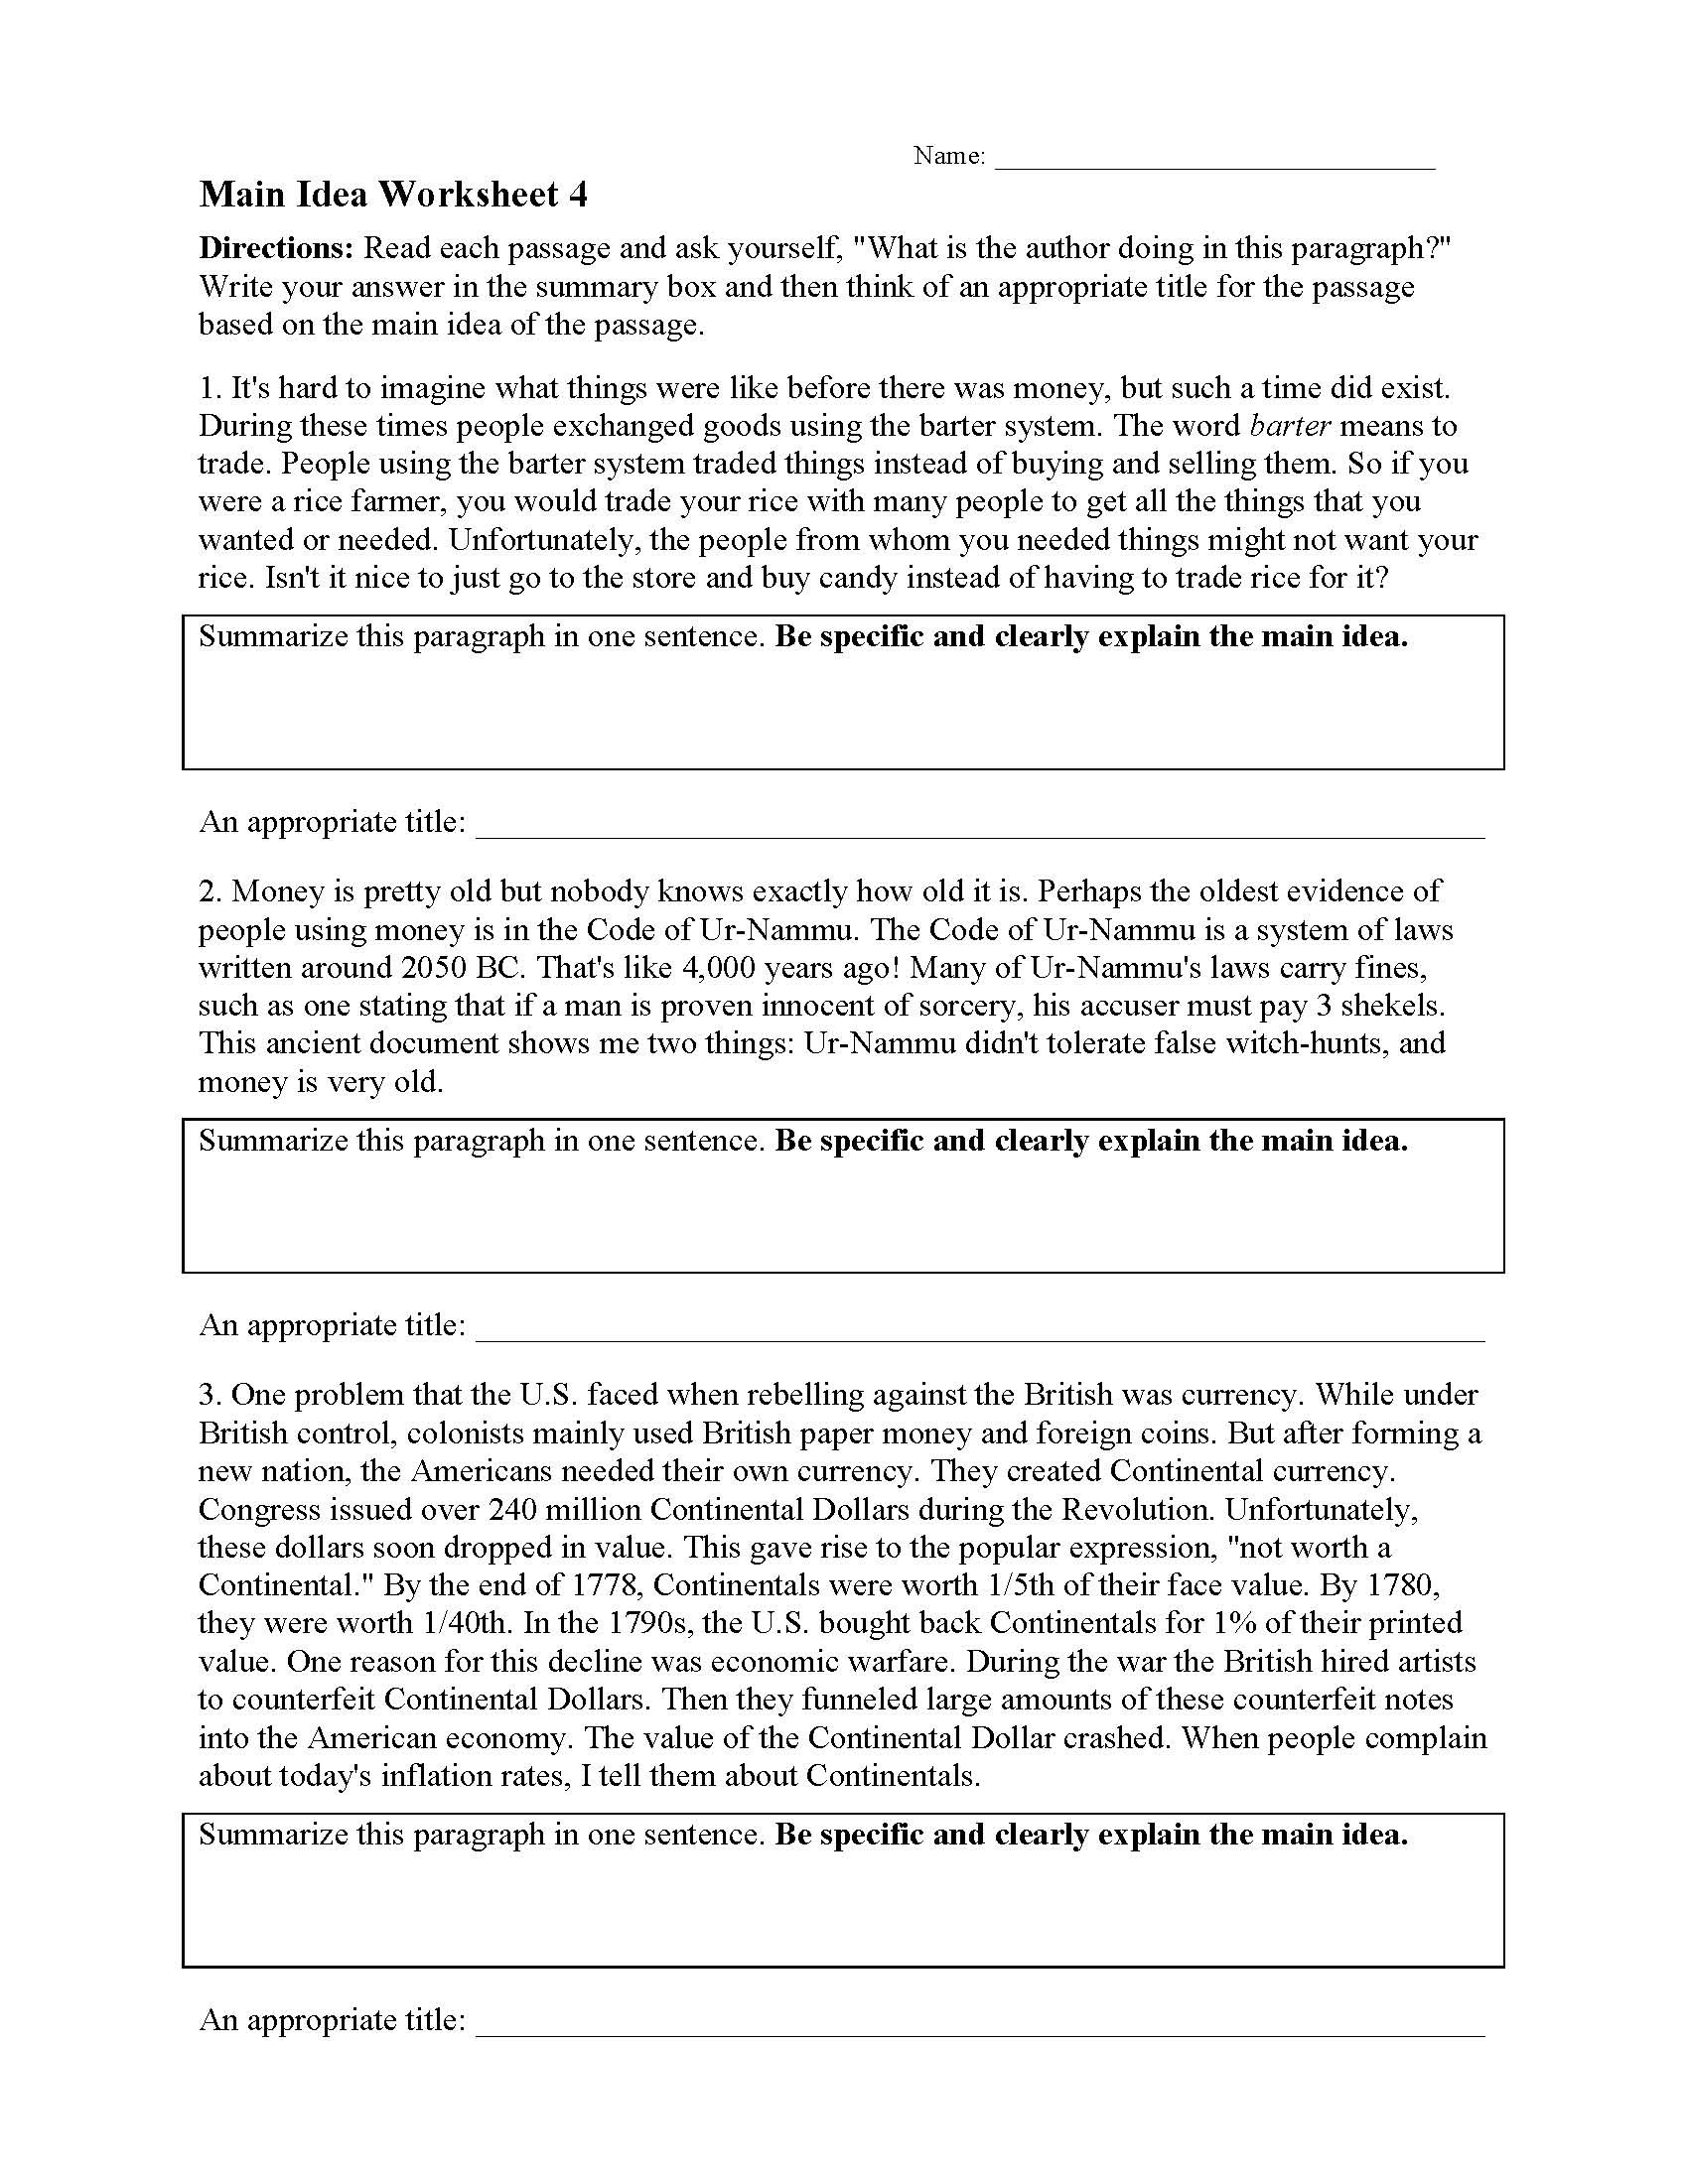 common-core-4th-grade-main-idea-worksheets-commonworksheets